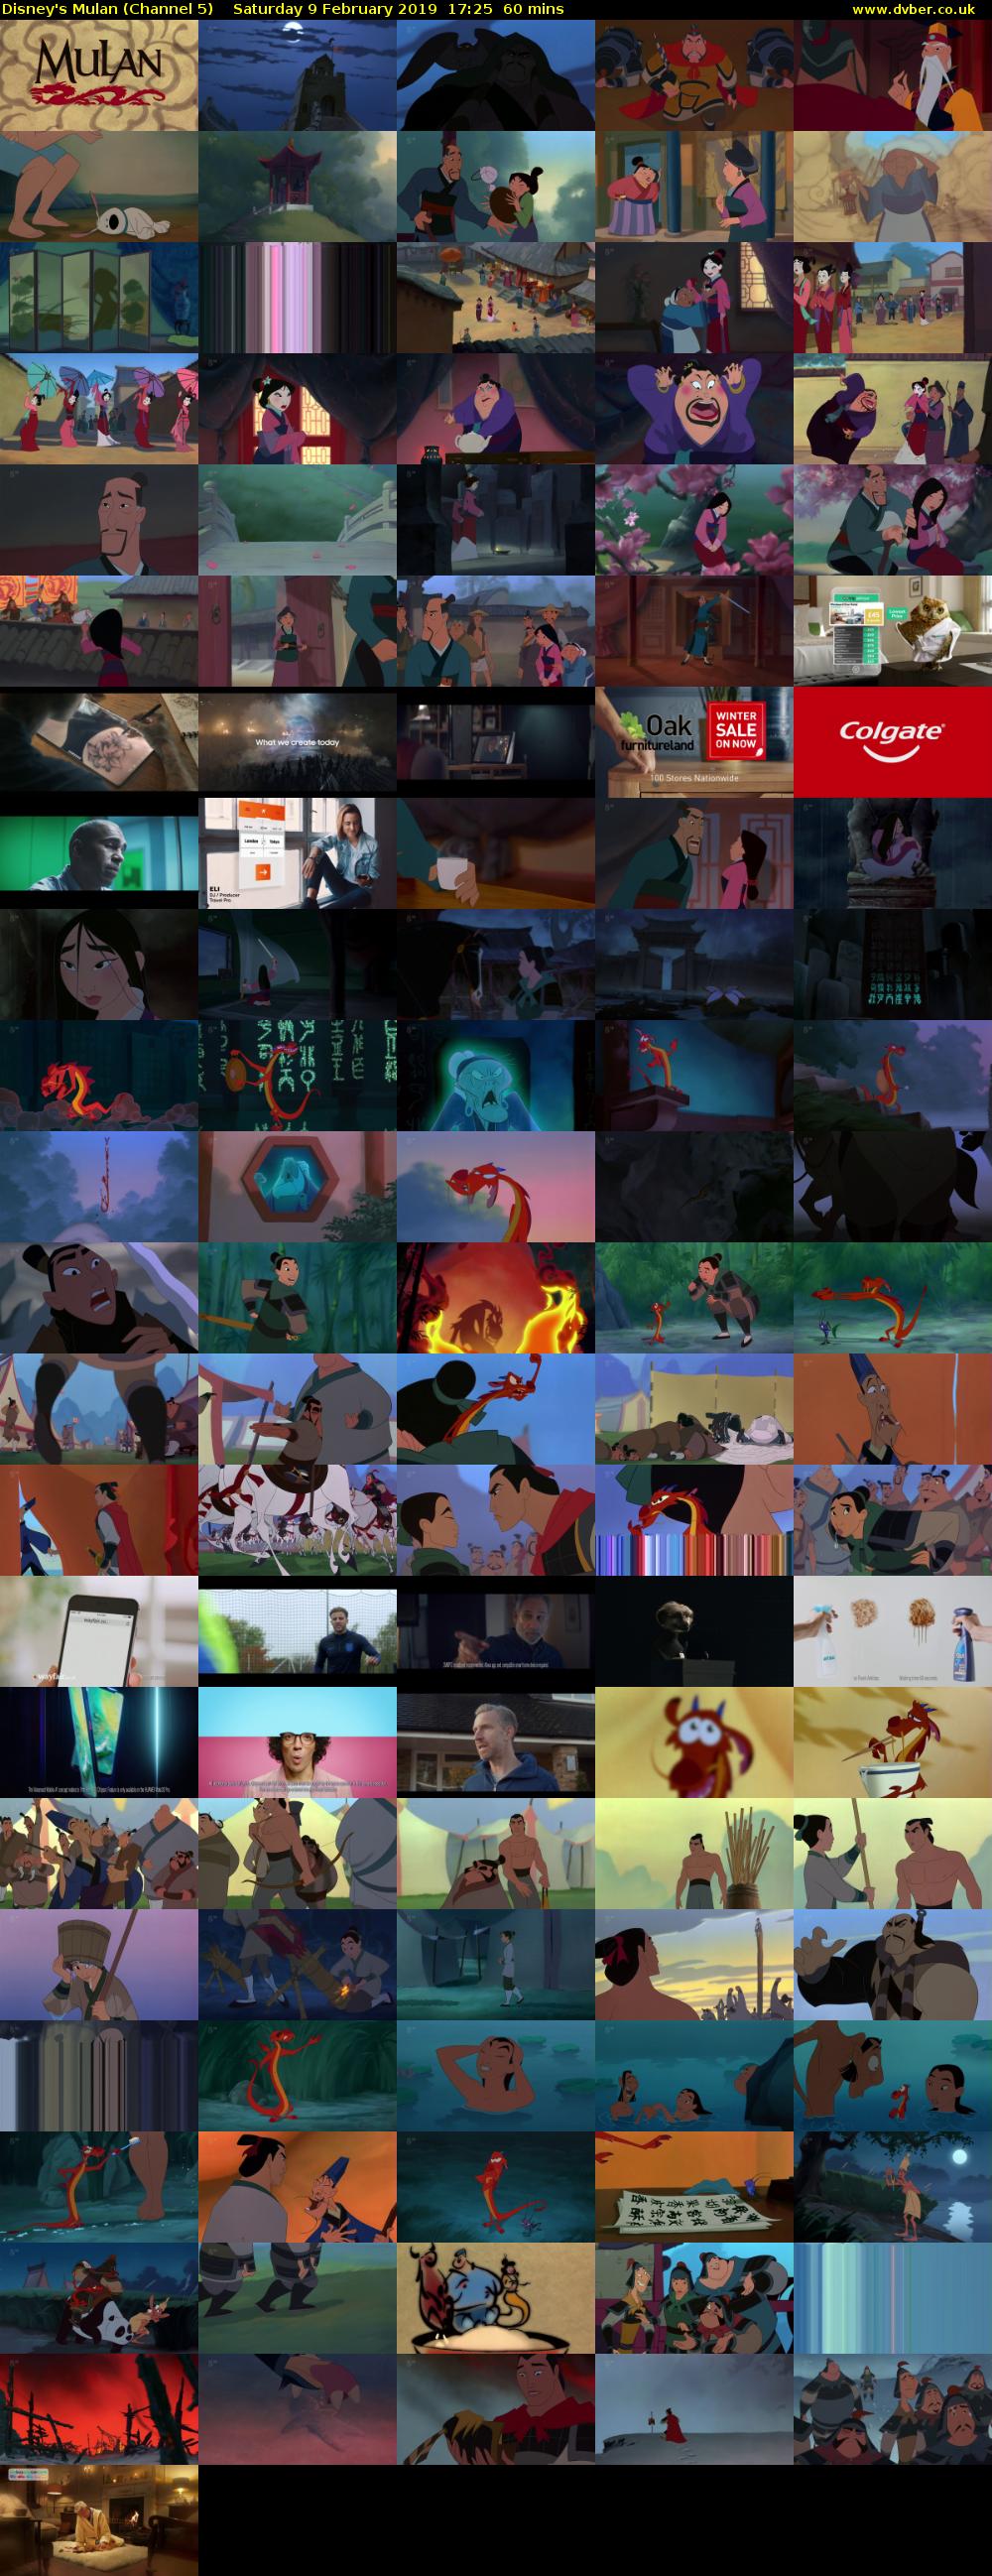 Disney's Mulan (Channel 5) Saturday 9 February 2019 17:25 - 18:25